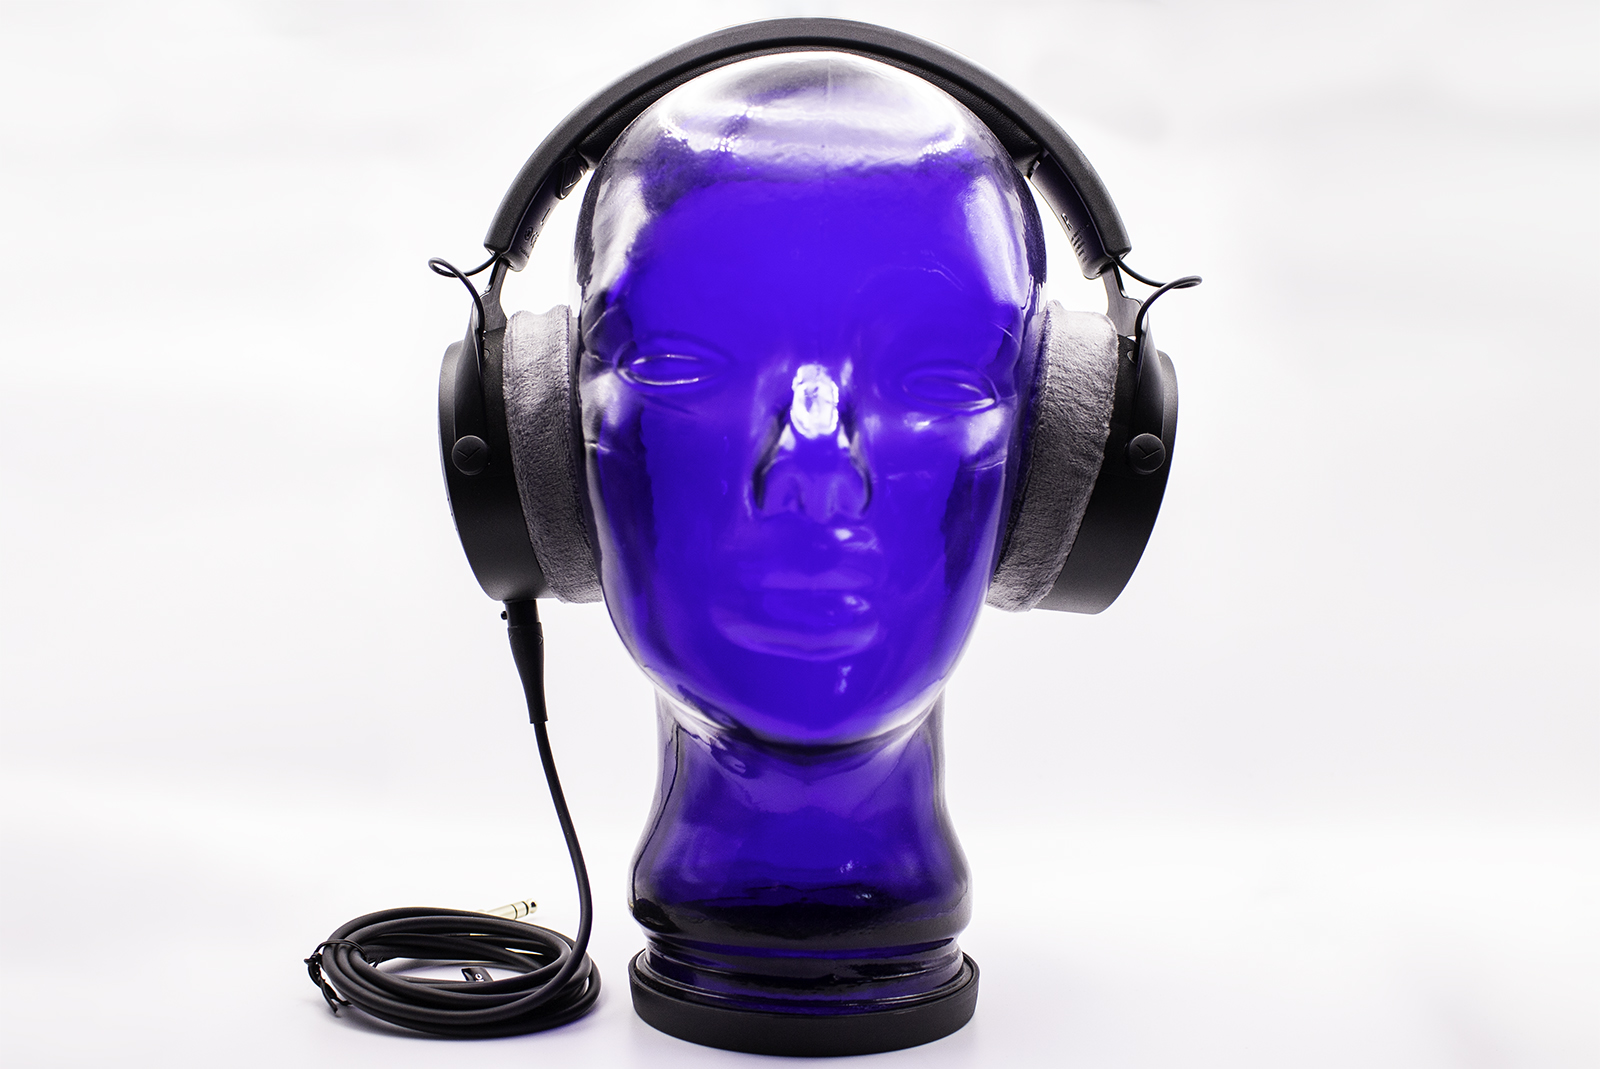 Beyerdynamic DT 770 Pro headphones review - Higher Hz